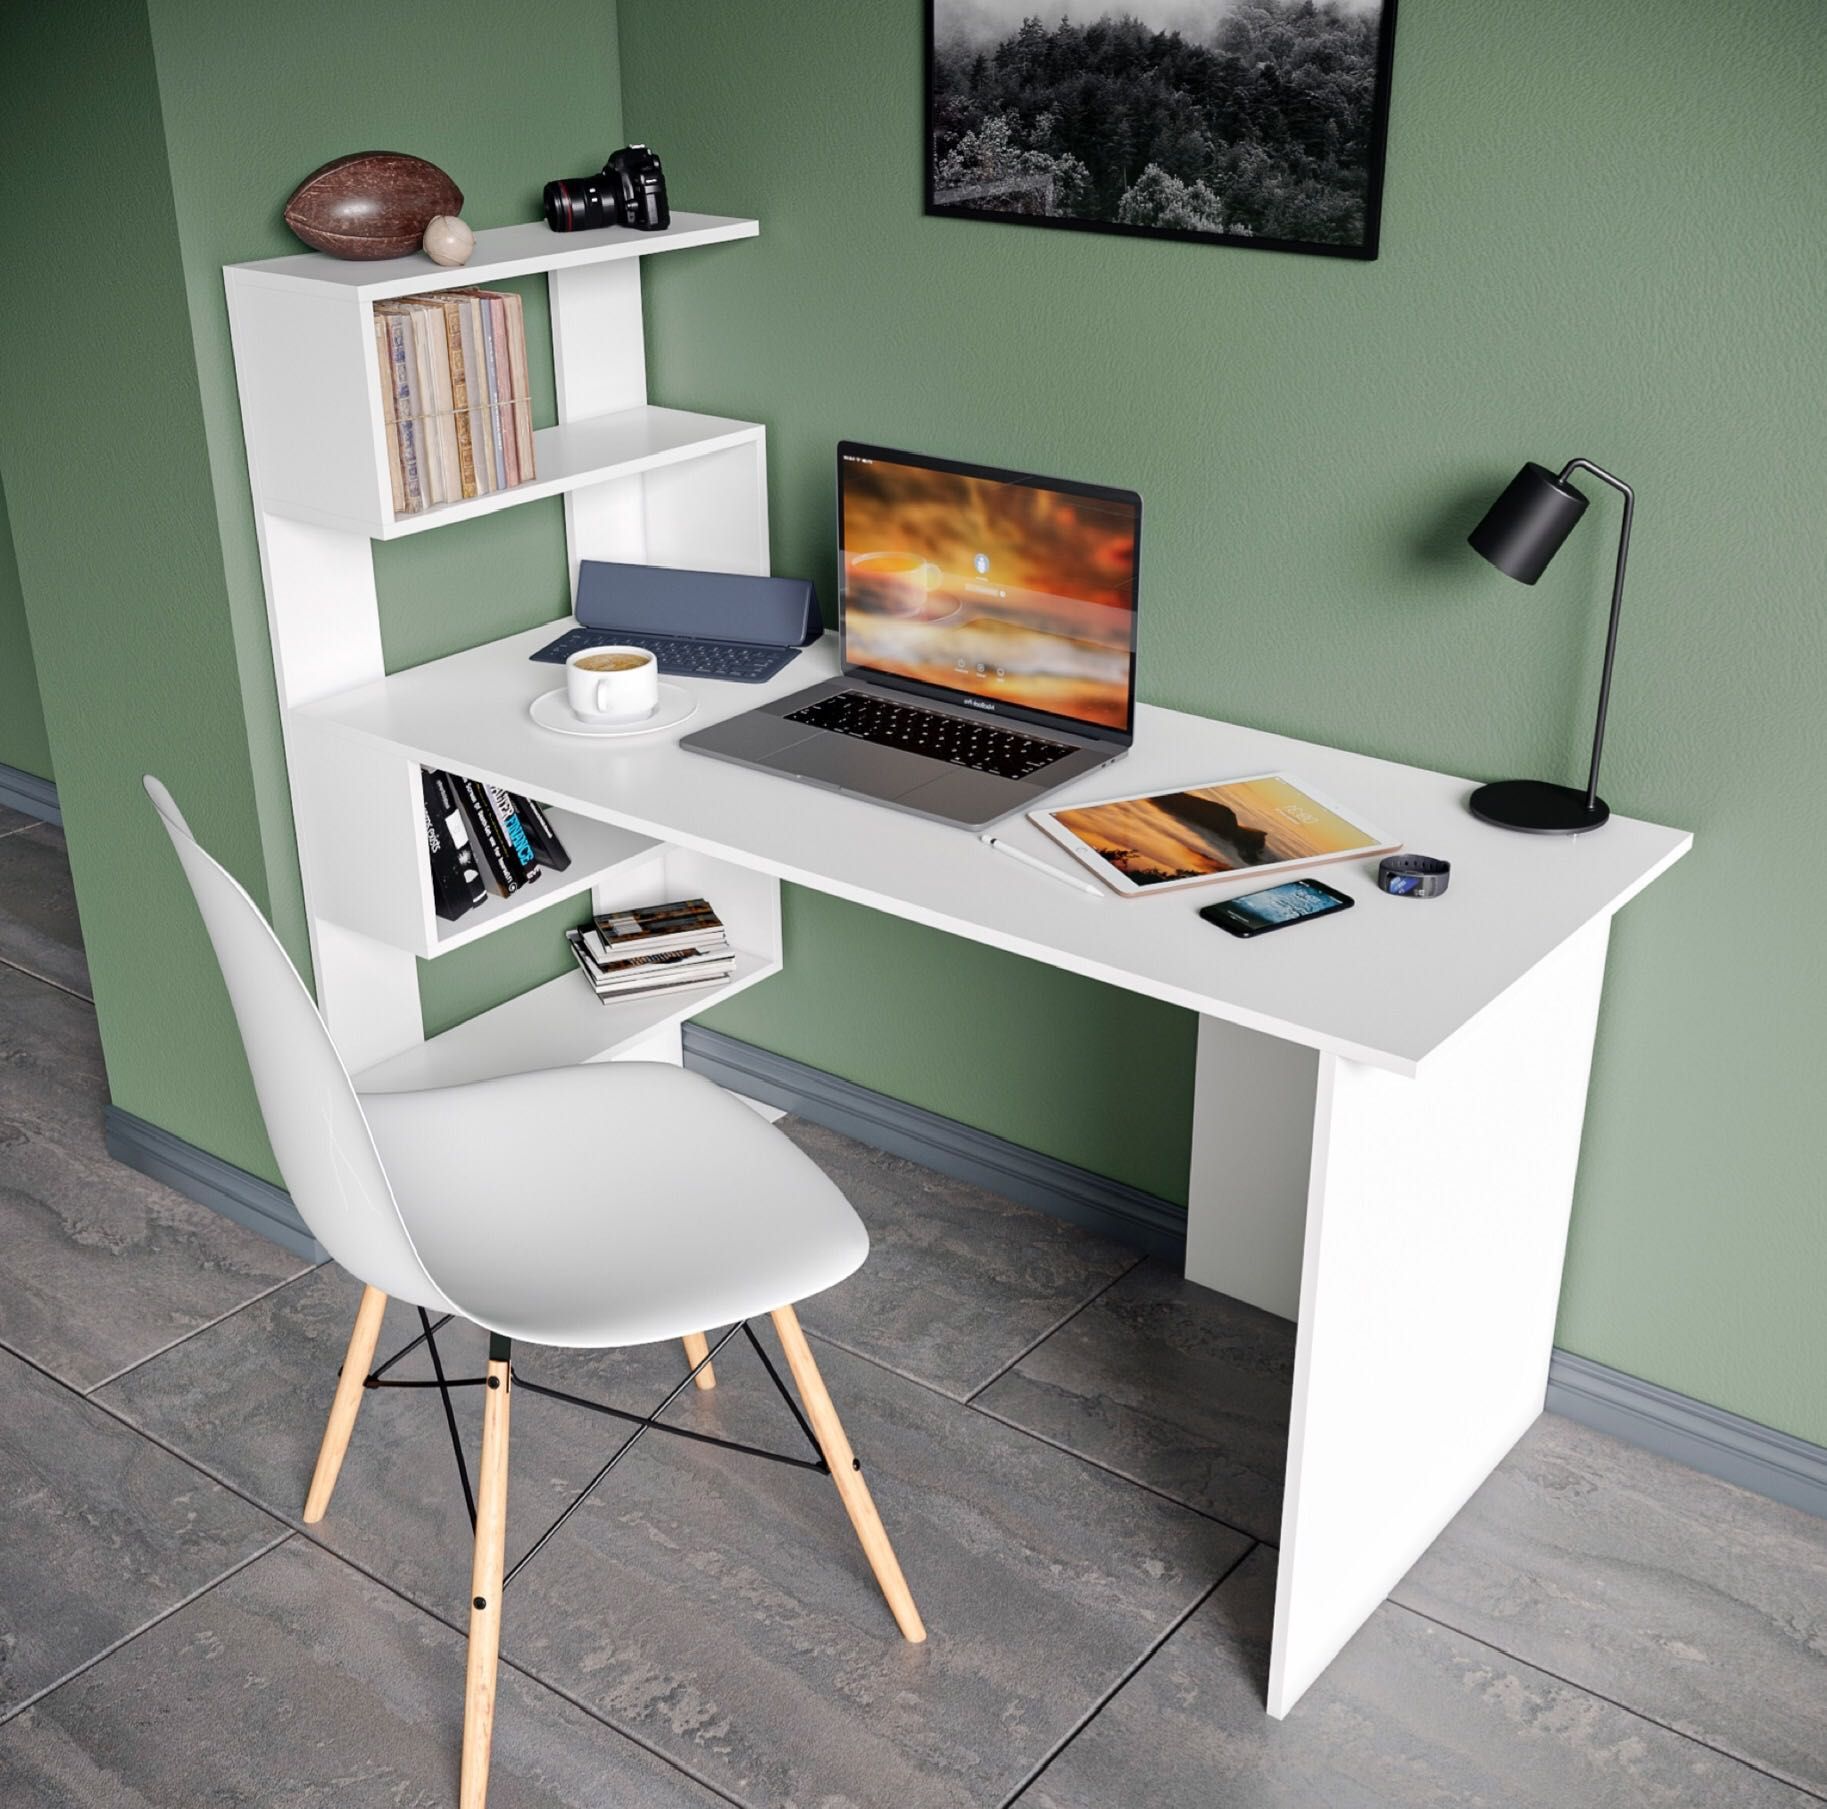 Офисный компьютерный письменный стол Комп'ютерний офісний стіл